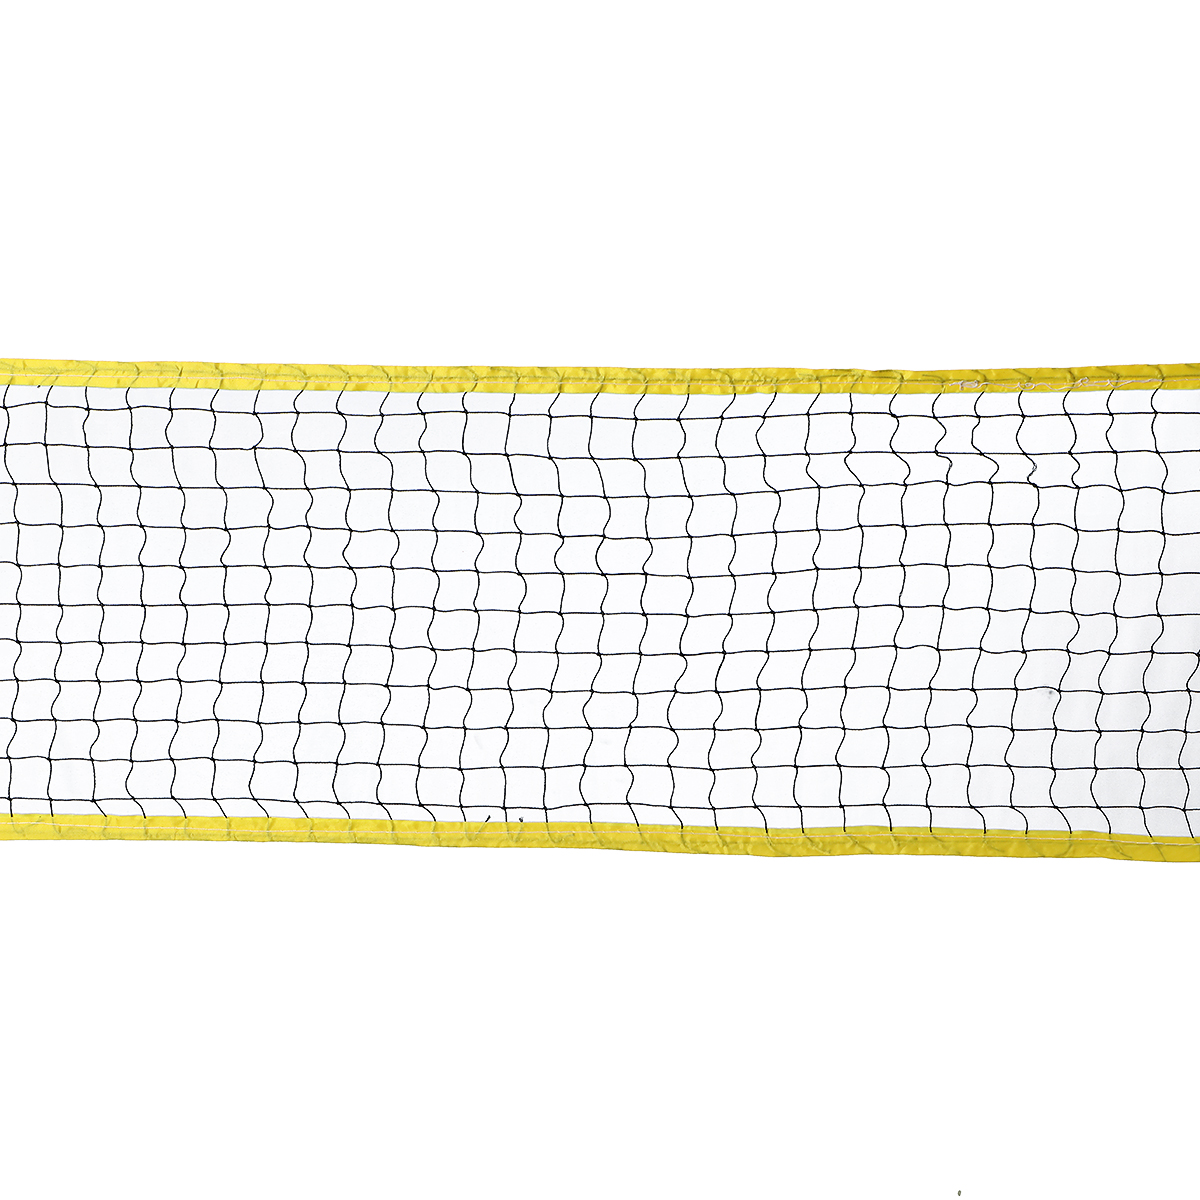 300x150CM-Standard-Outdoor-Badminton-Tennis-Net-Replacement-Badminton-Net-Professional-Training-Spor-1724984-8